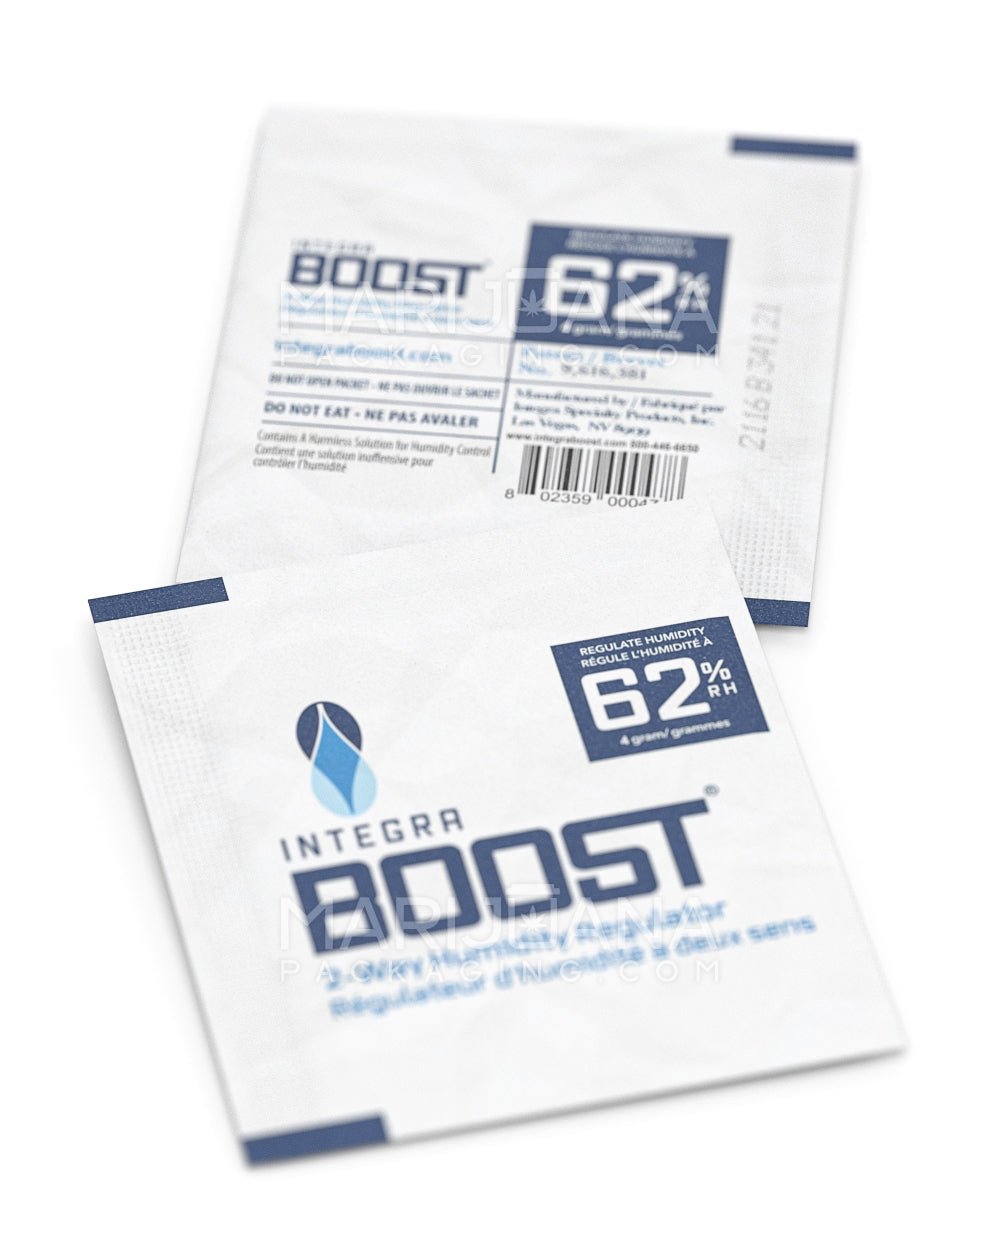 INTEGRA | Boost Control Packs | 4 Grams - 62% - 1000 Count - 5